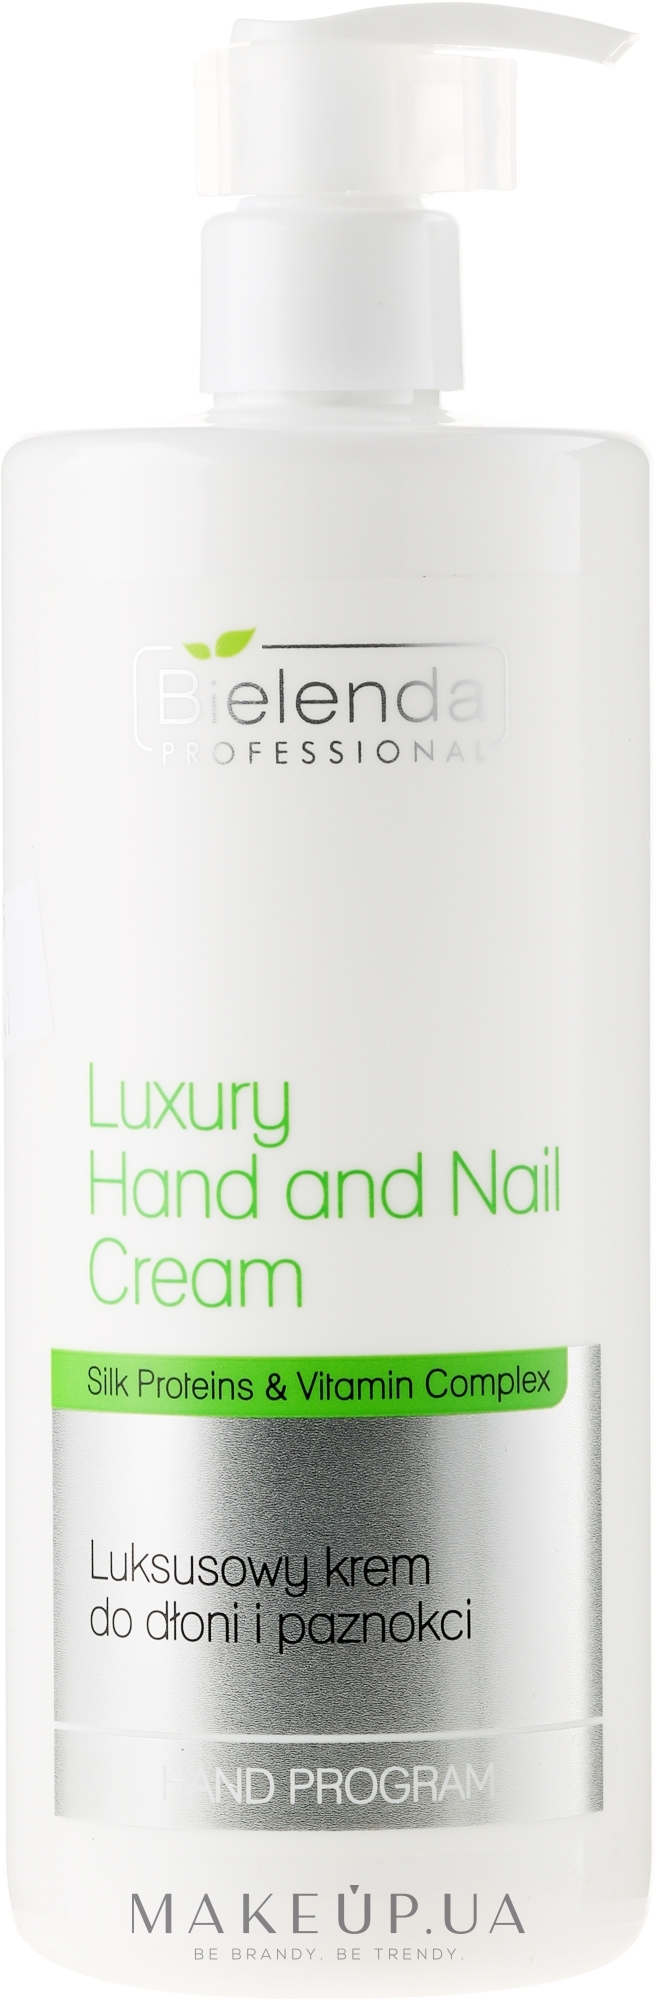 Эксклюзивный крем для рук - Bielenda Professional Luxury Hand and Nail Cream — фото 500ml